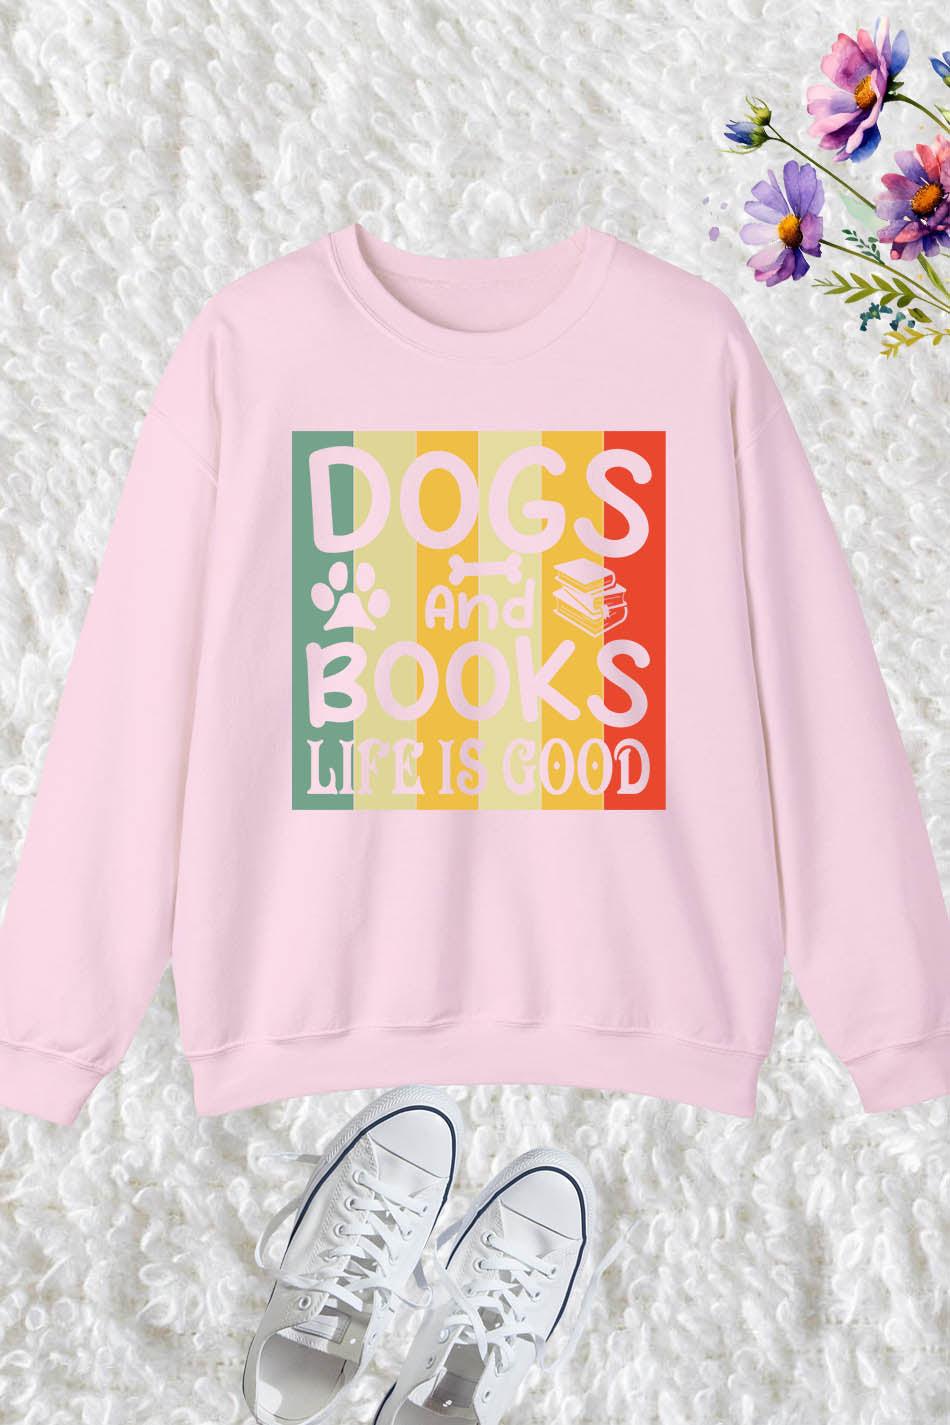 Dogs and Books Life is Good Funny Animal Sweatshirt